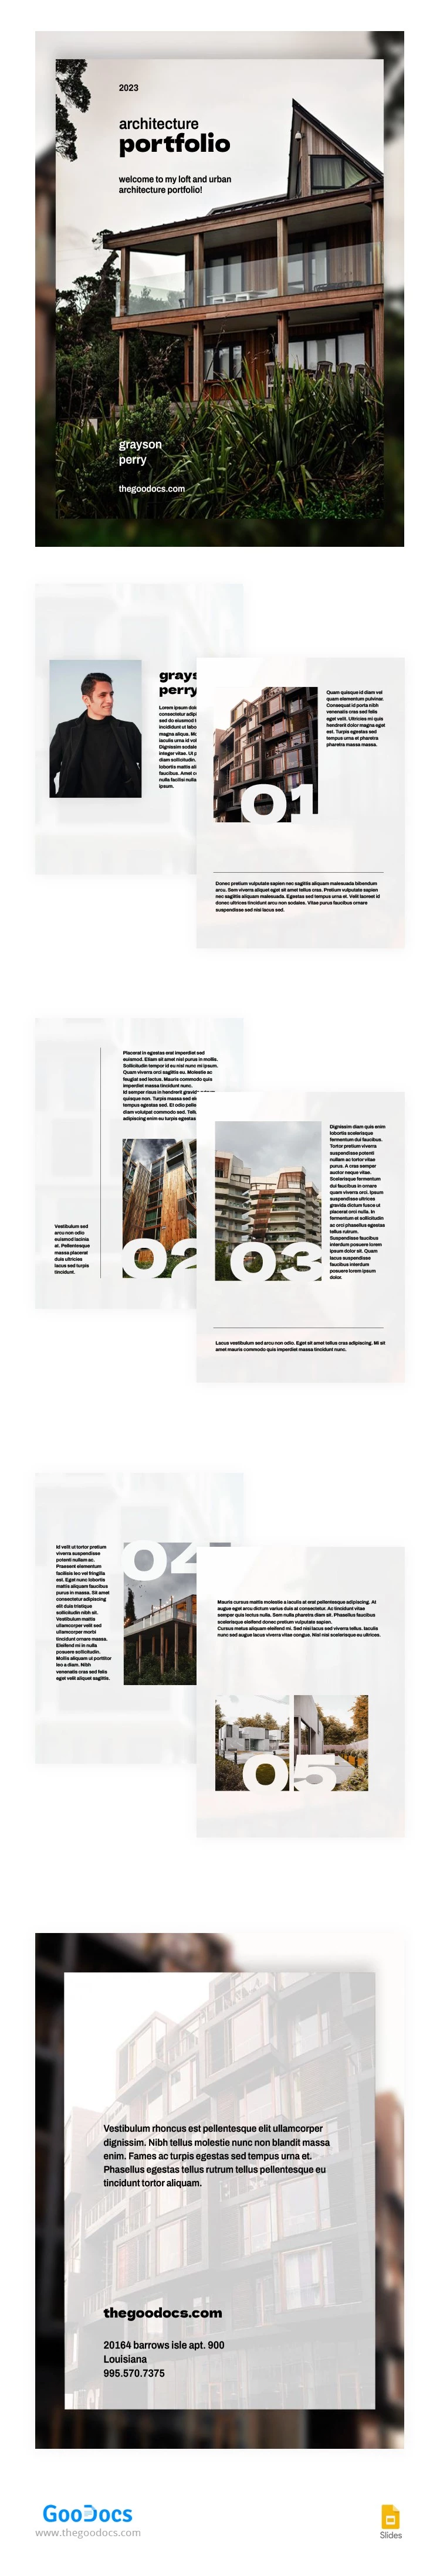 Portfolio d'architecture urbaine - free Google Docs Template - 10066170